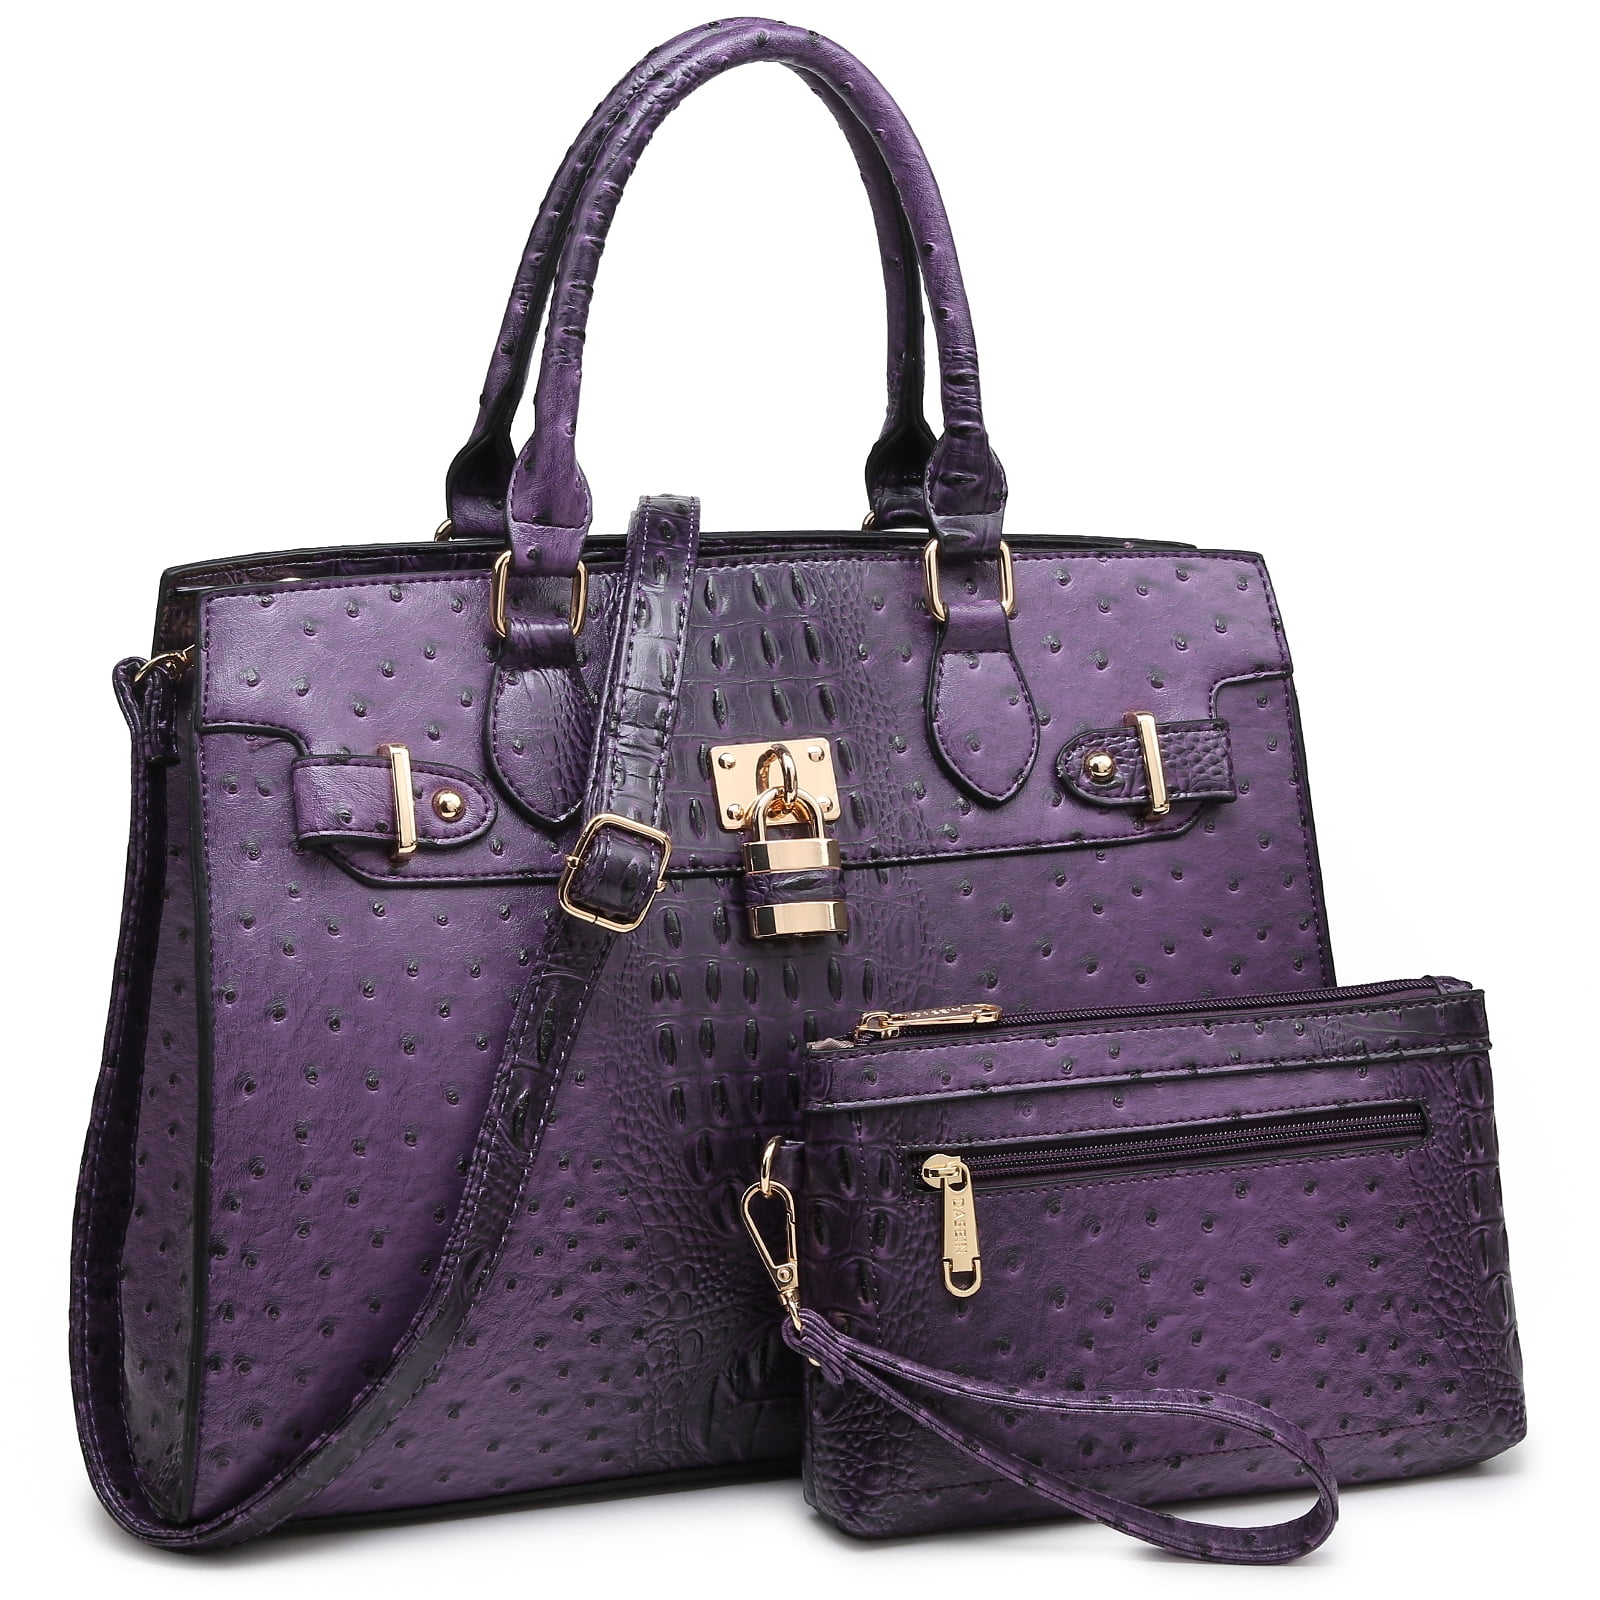 Dasein Women Handbags and Purses Ladies Shoulder Bag Top Handle Satchel ...